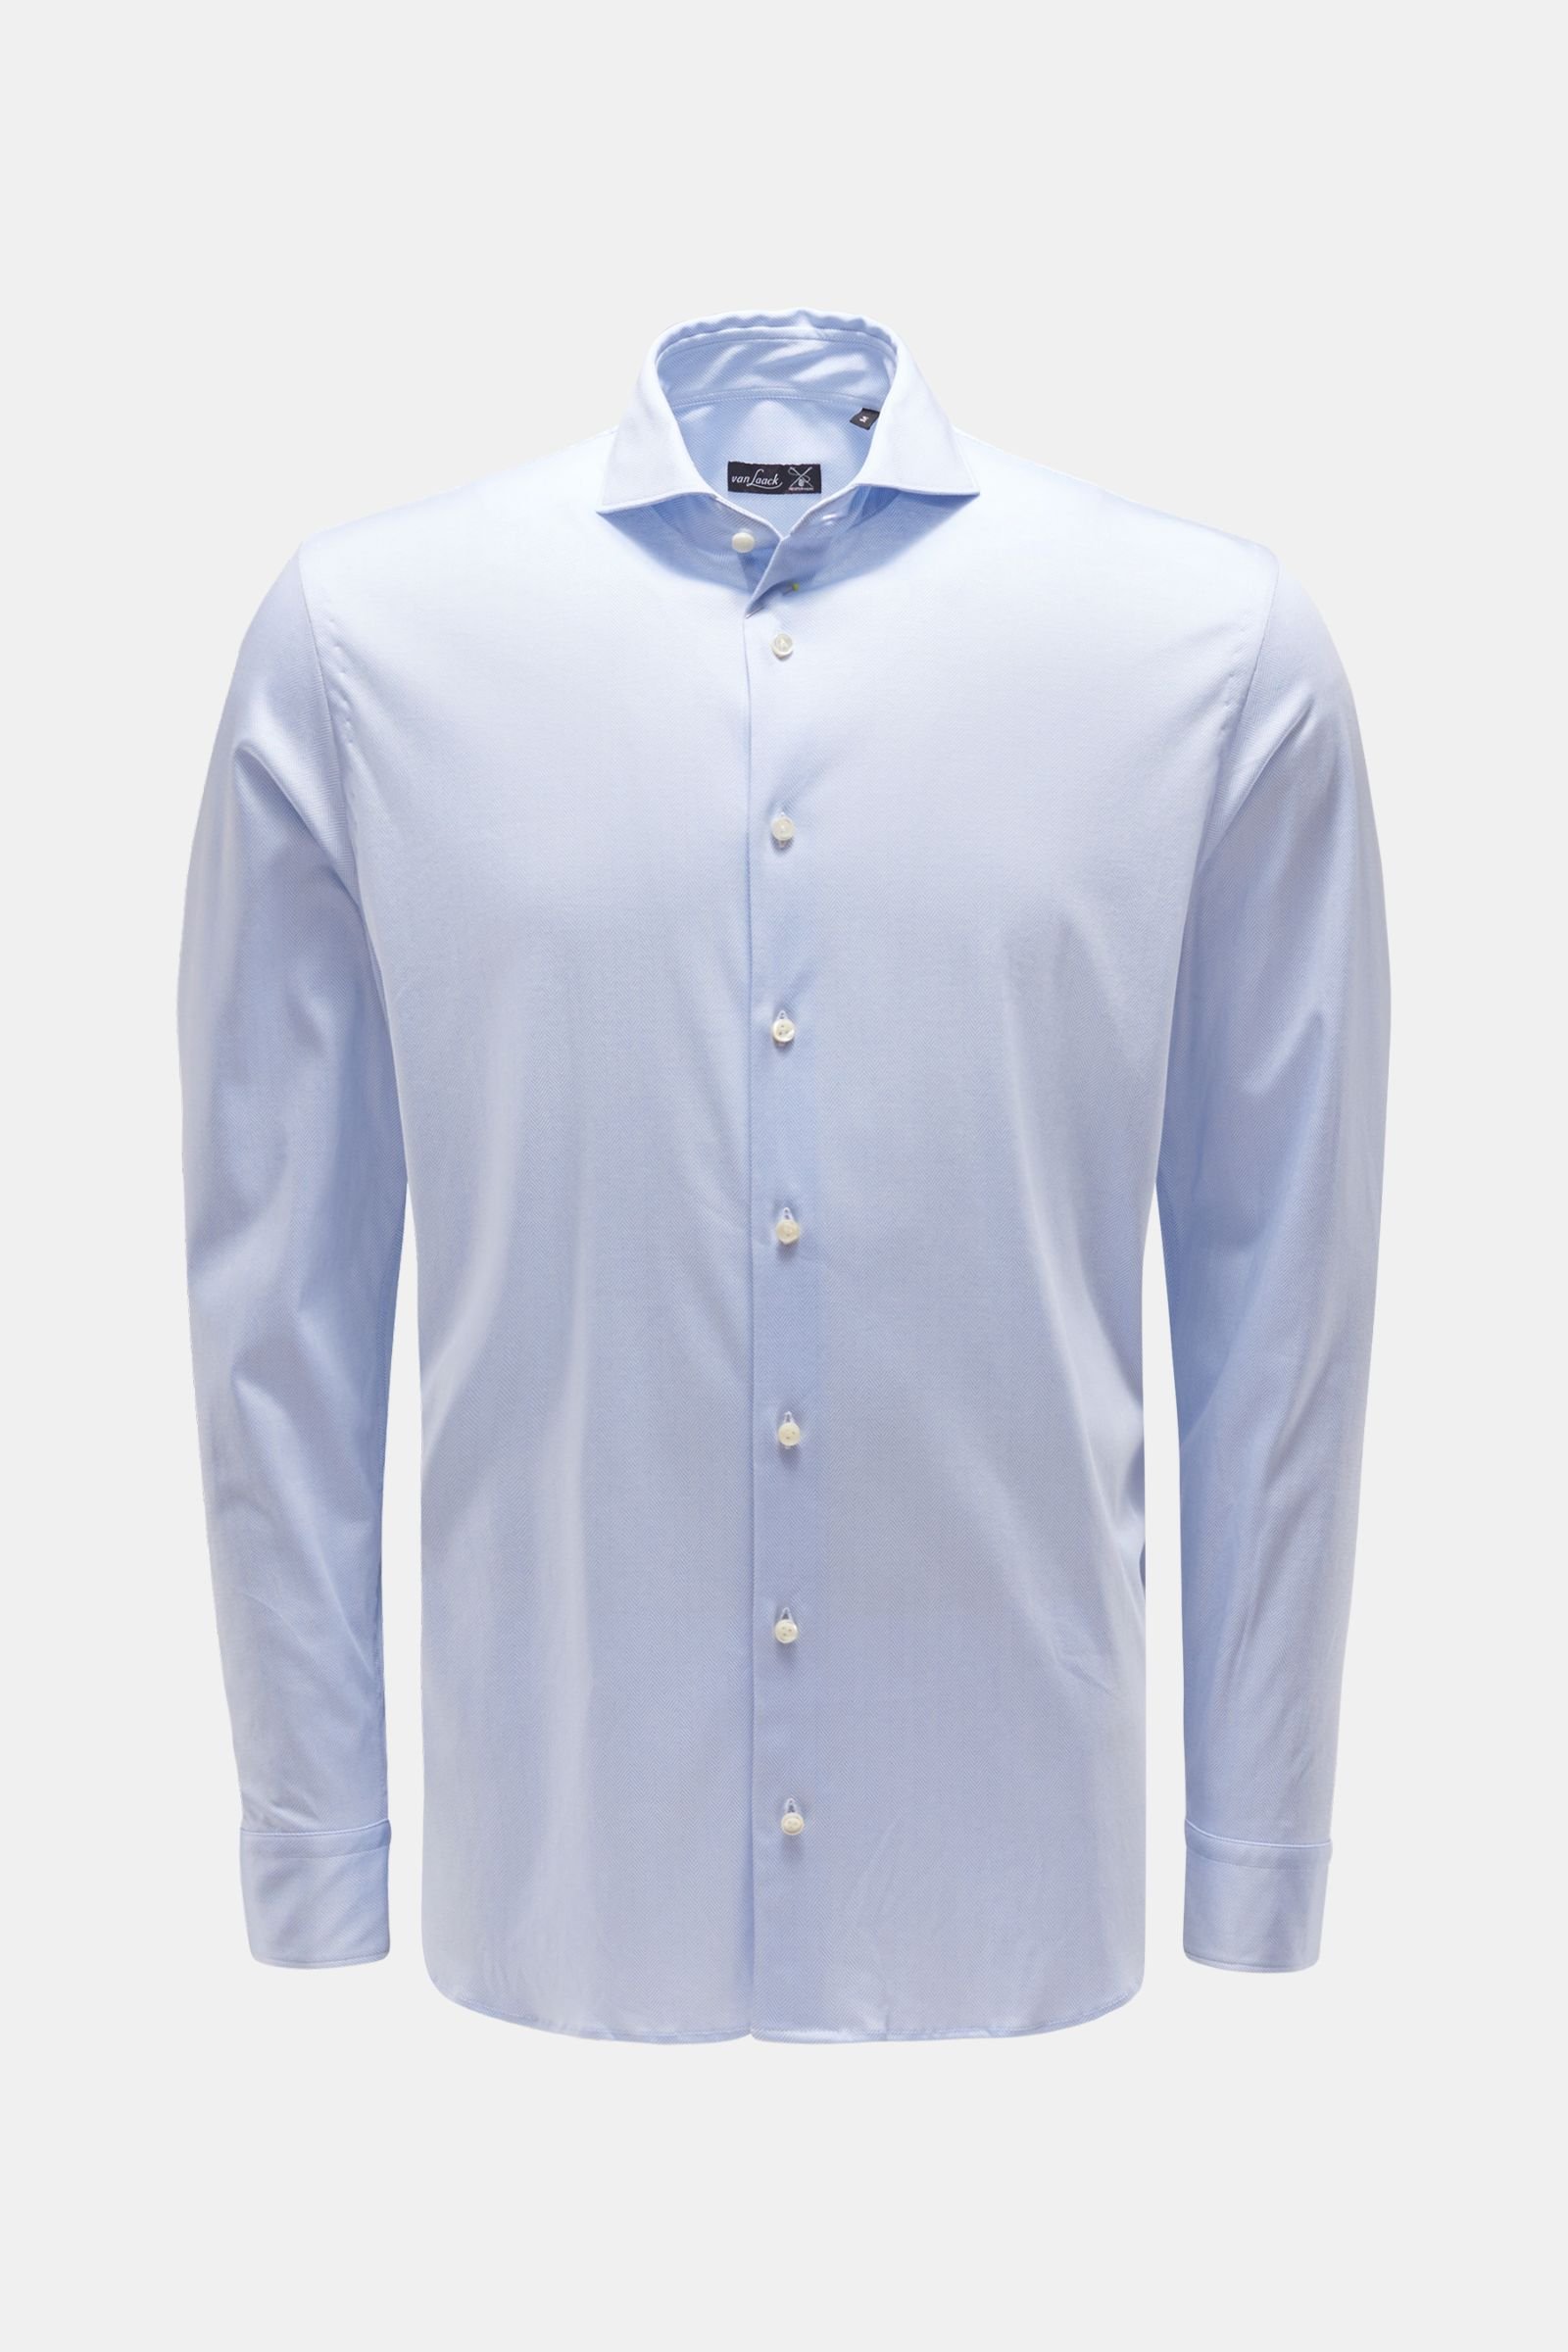 Jersey shirt shark collar 'M-Per-L' light blue/white patterned